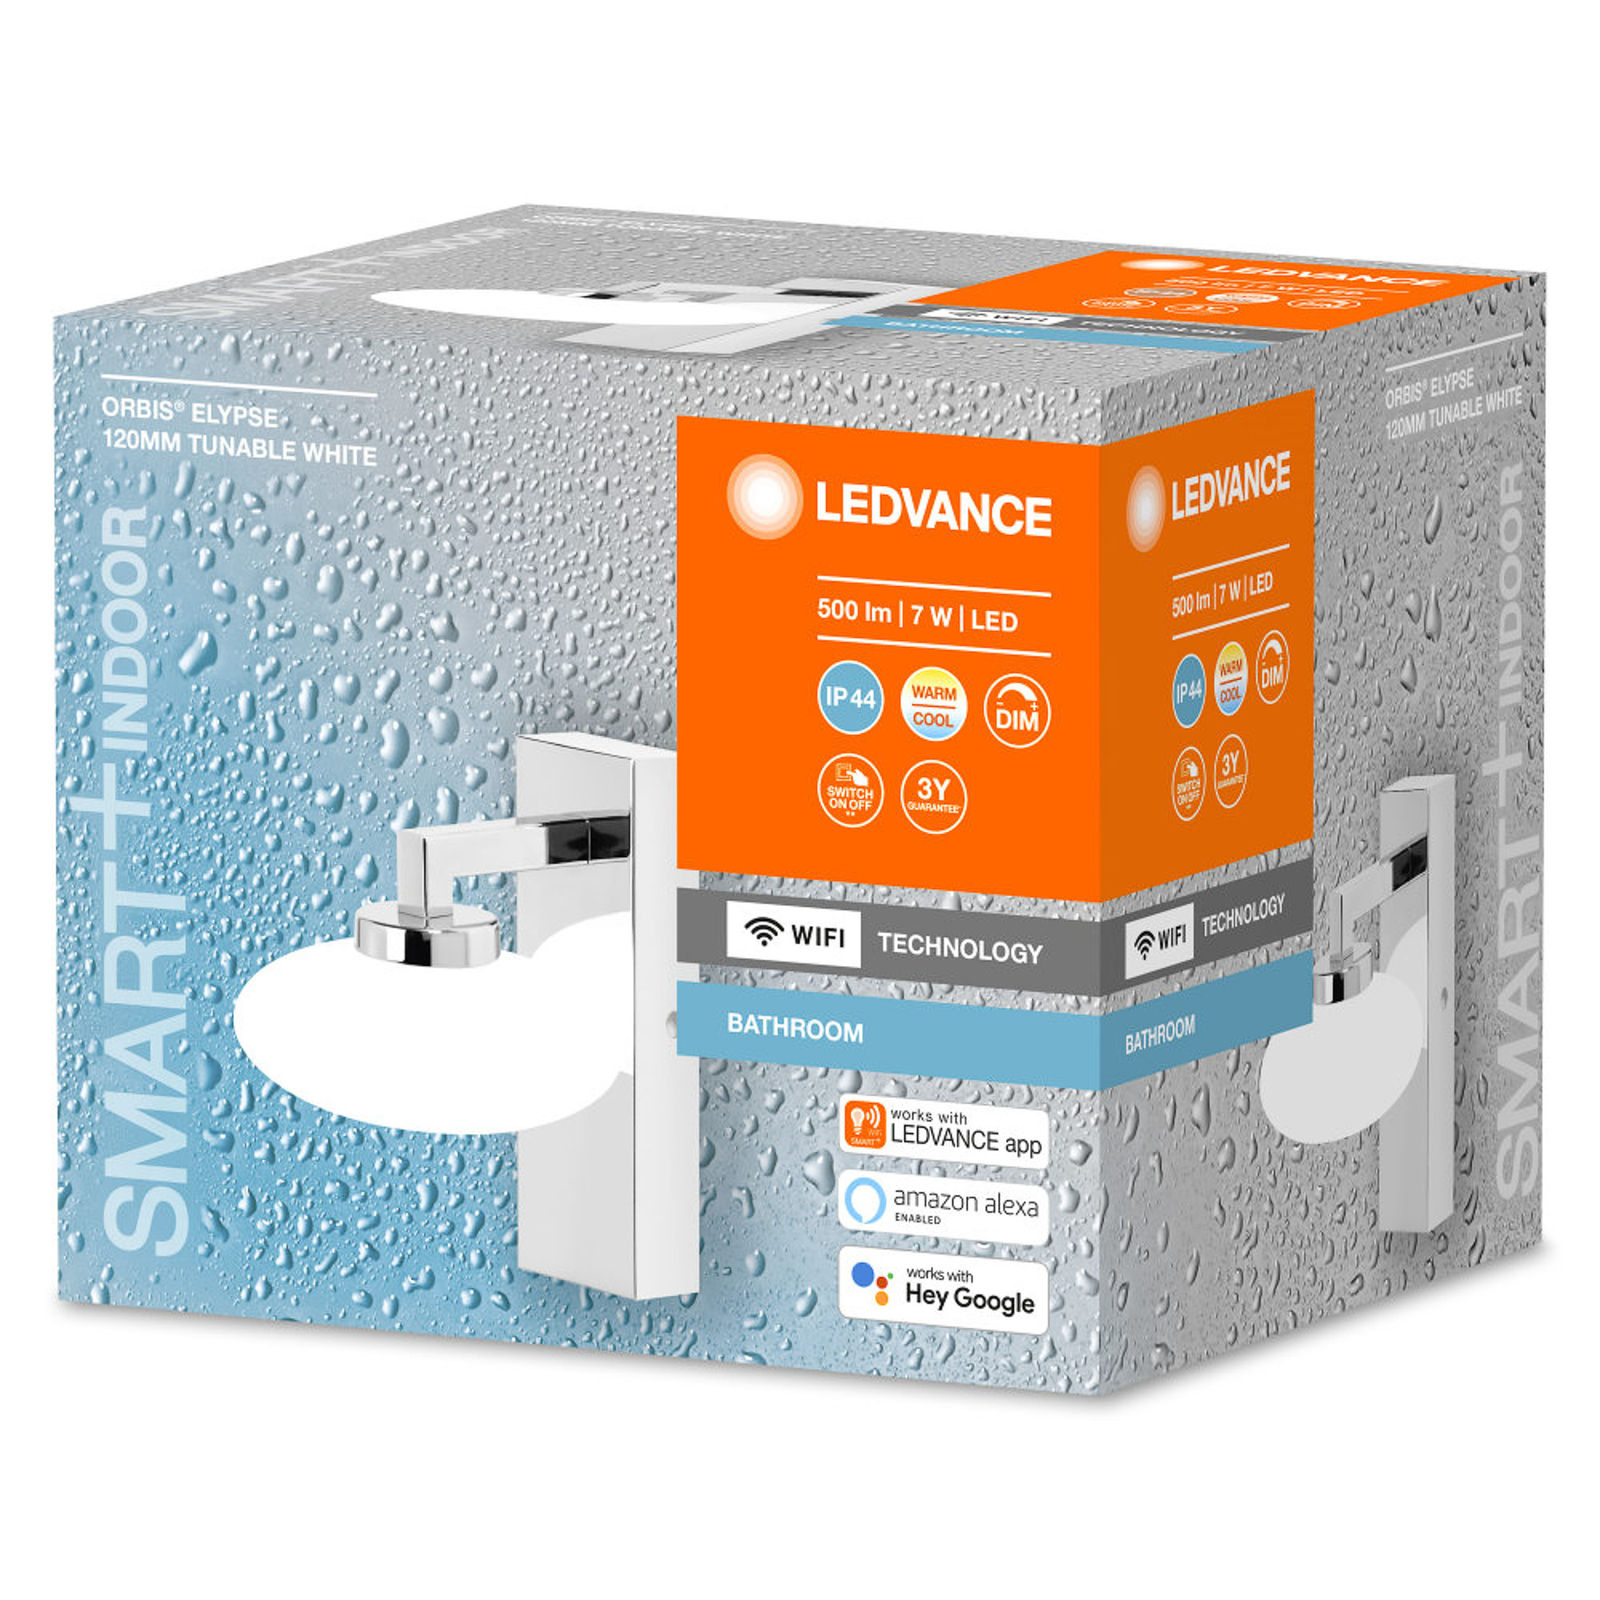 LEDVANCE SMART+ WiFi Orbis Wall Elypse, 1-bulb